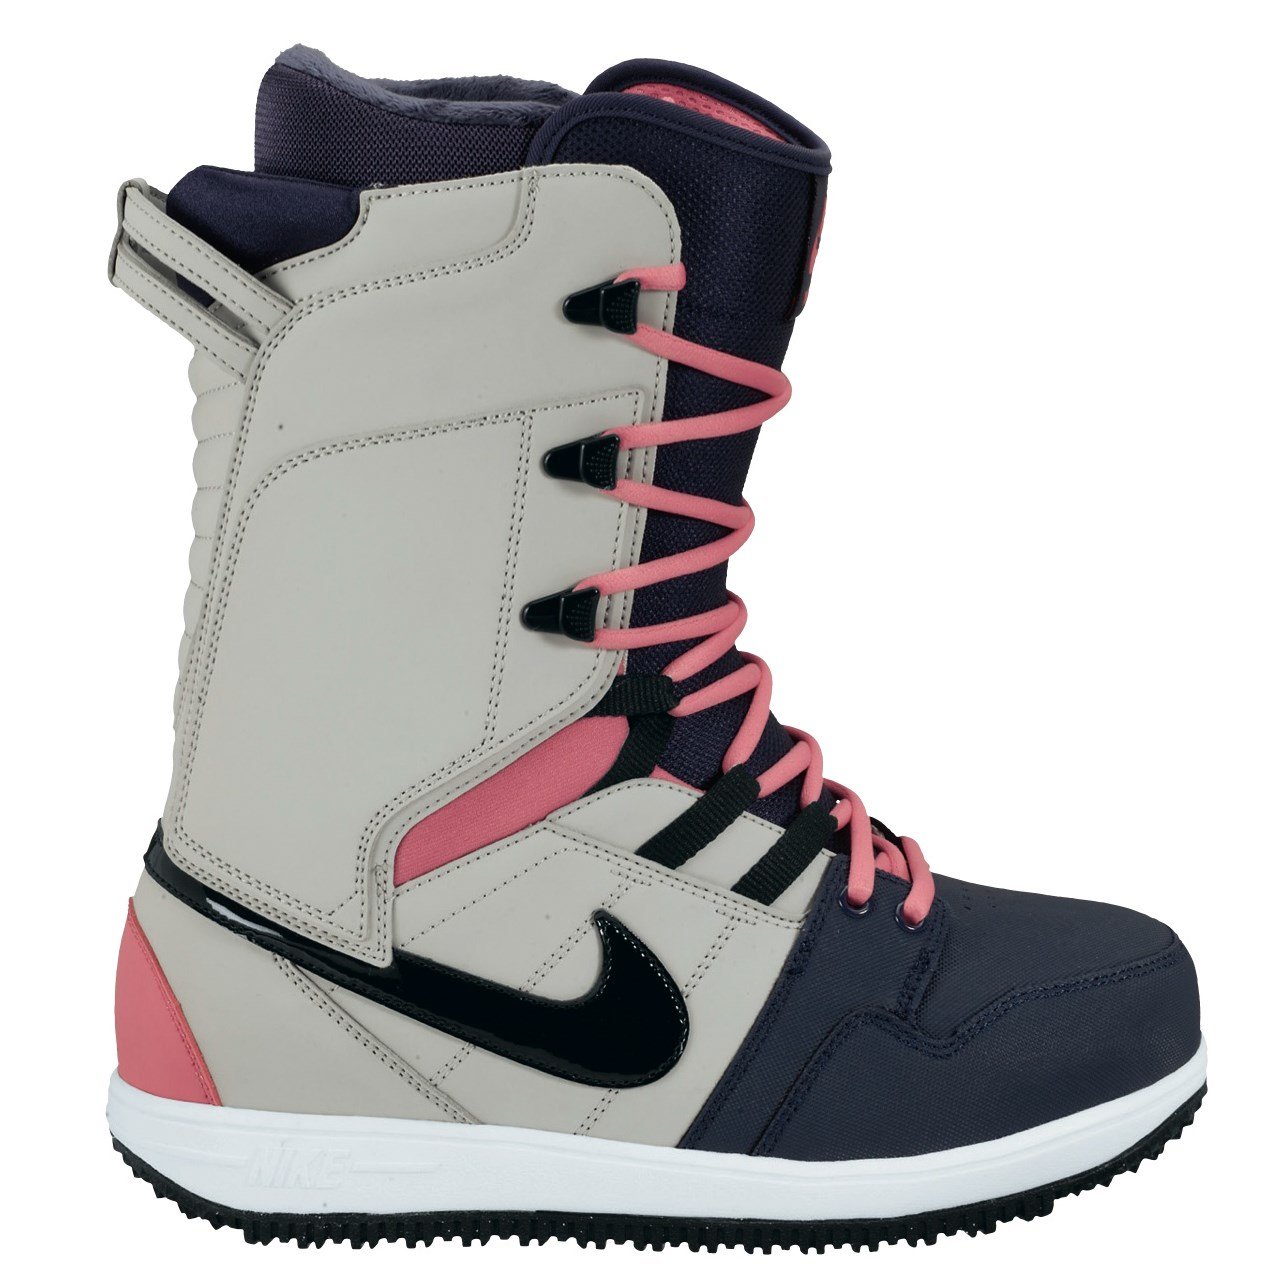 Nike Vapen Snowboard Boots - Women's 